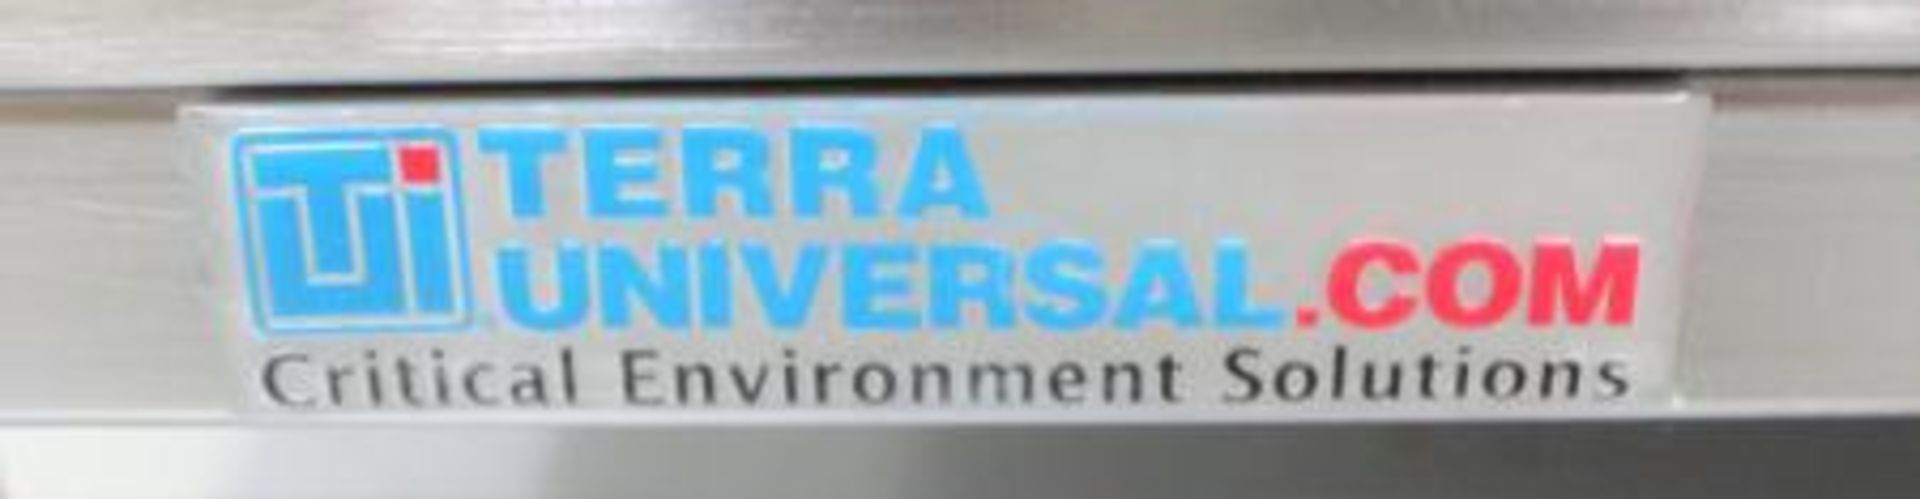 Terra Universal - Image 8 of 8